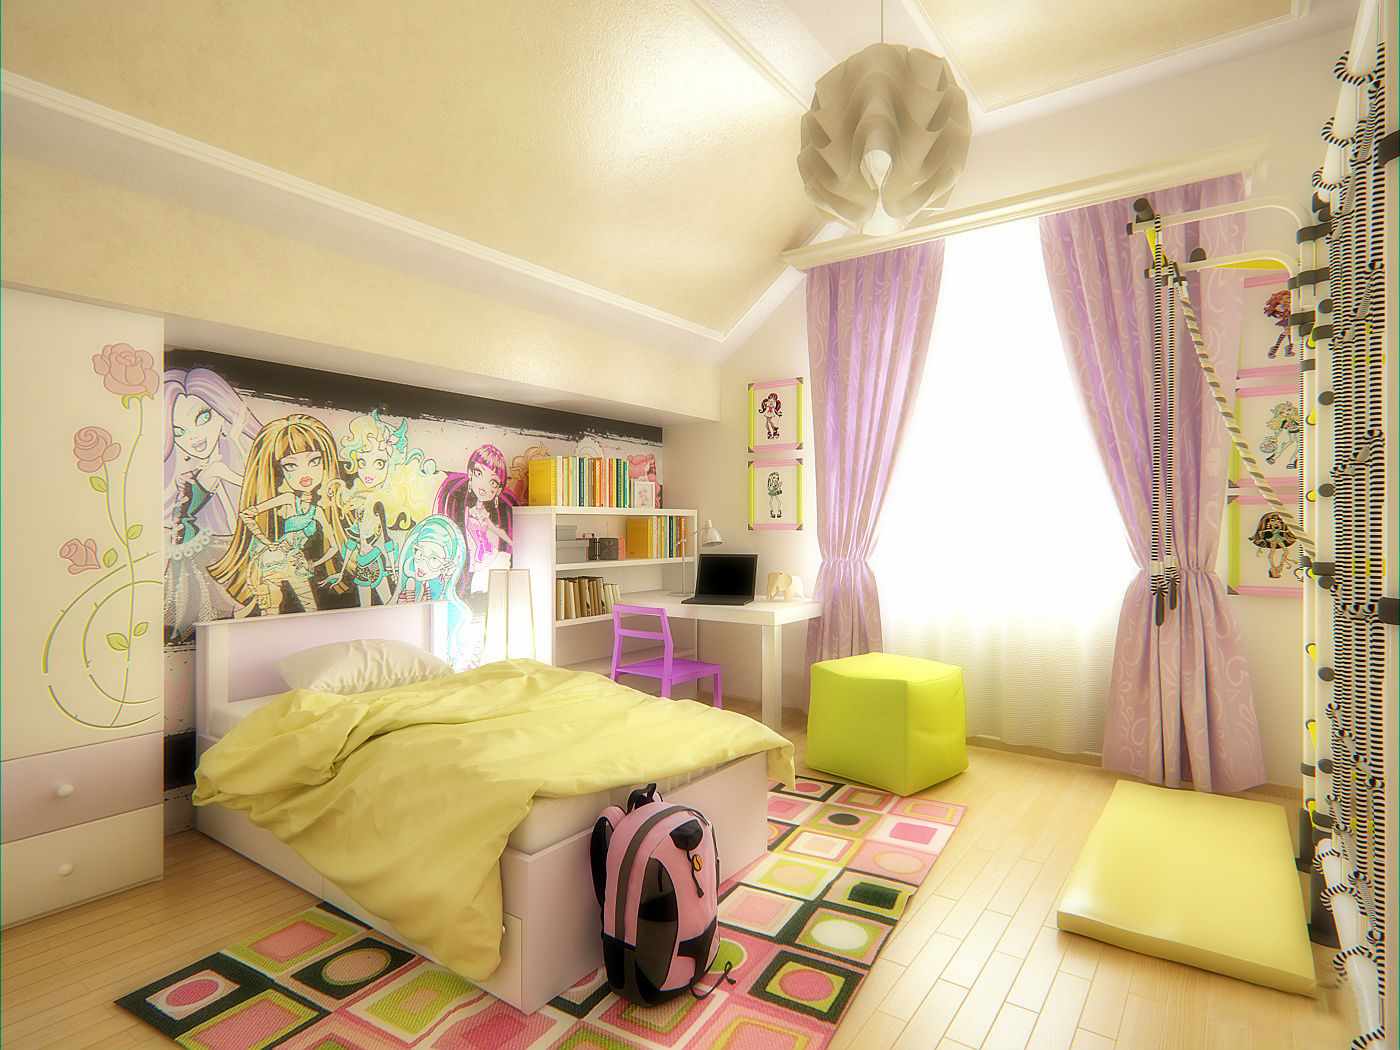 An example of an unusual nursery interior for a girl